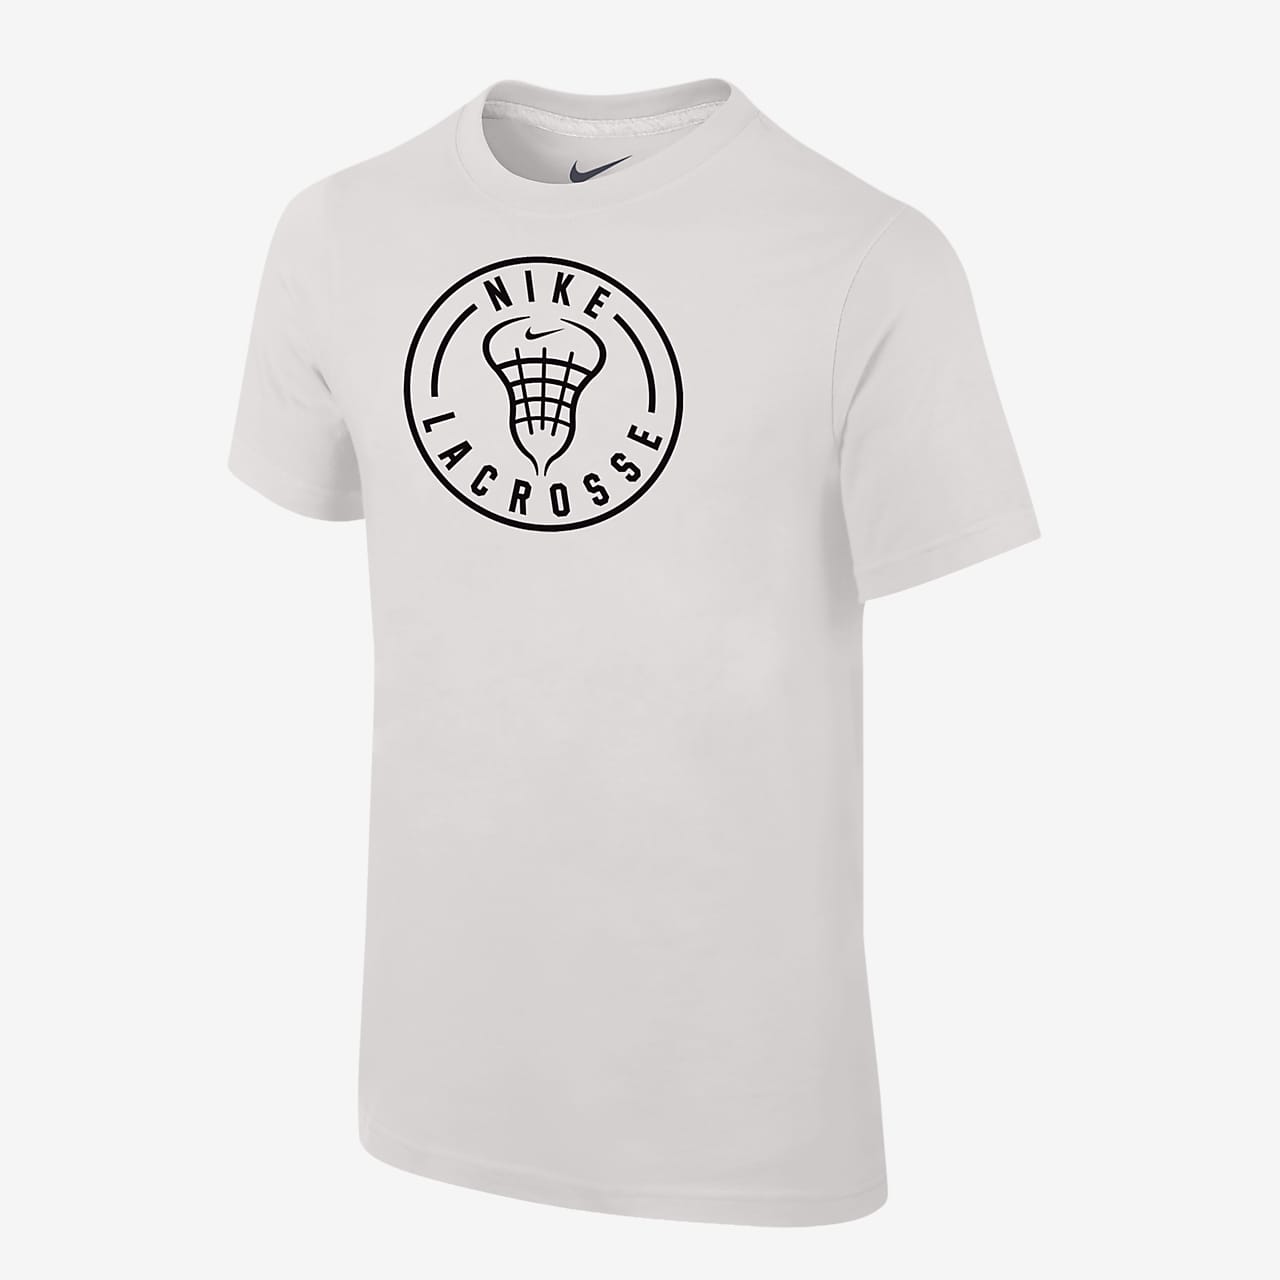 Nike Swoosh Lacrosse Big Kids' (Boys') T-Shirt.